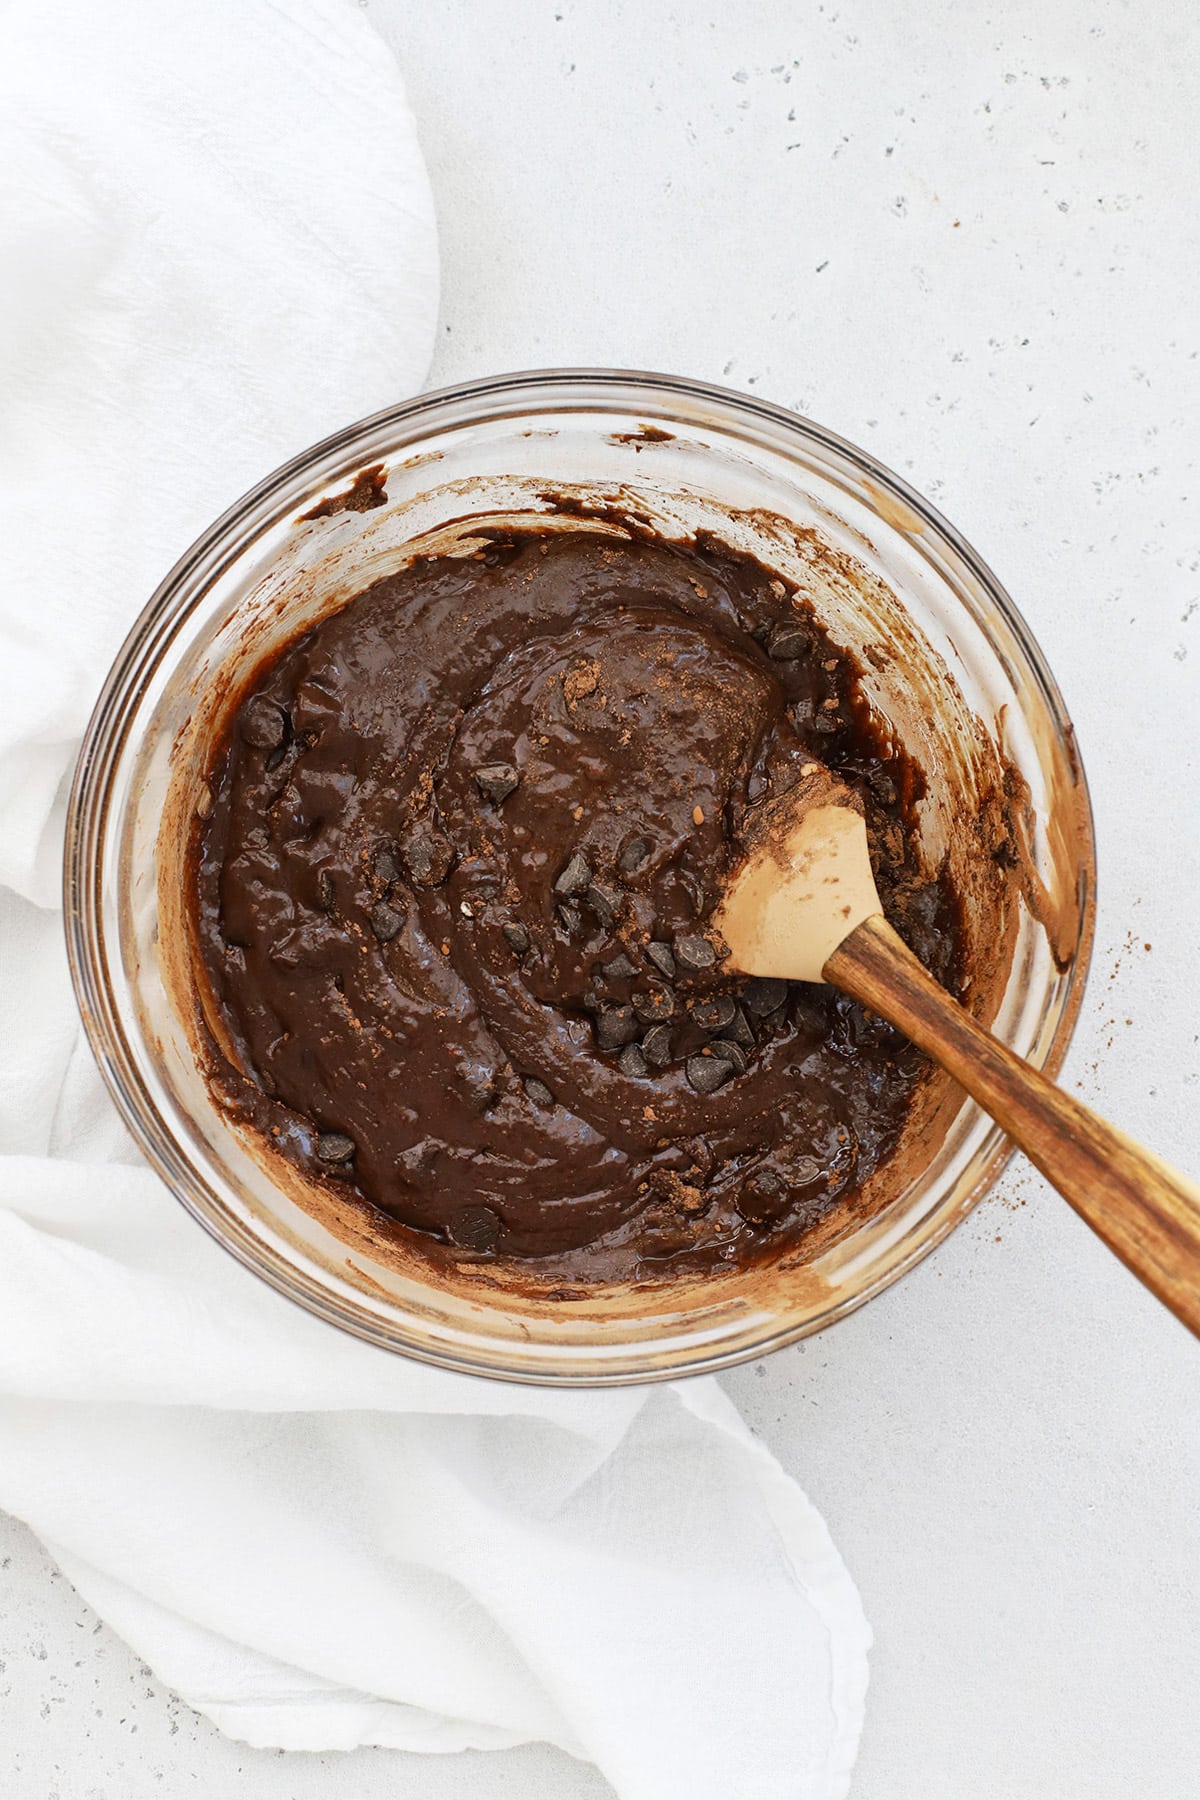 Stirring chocolate chips into gluten-free brownie batter